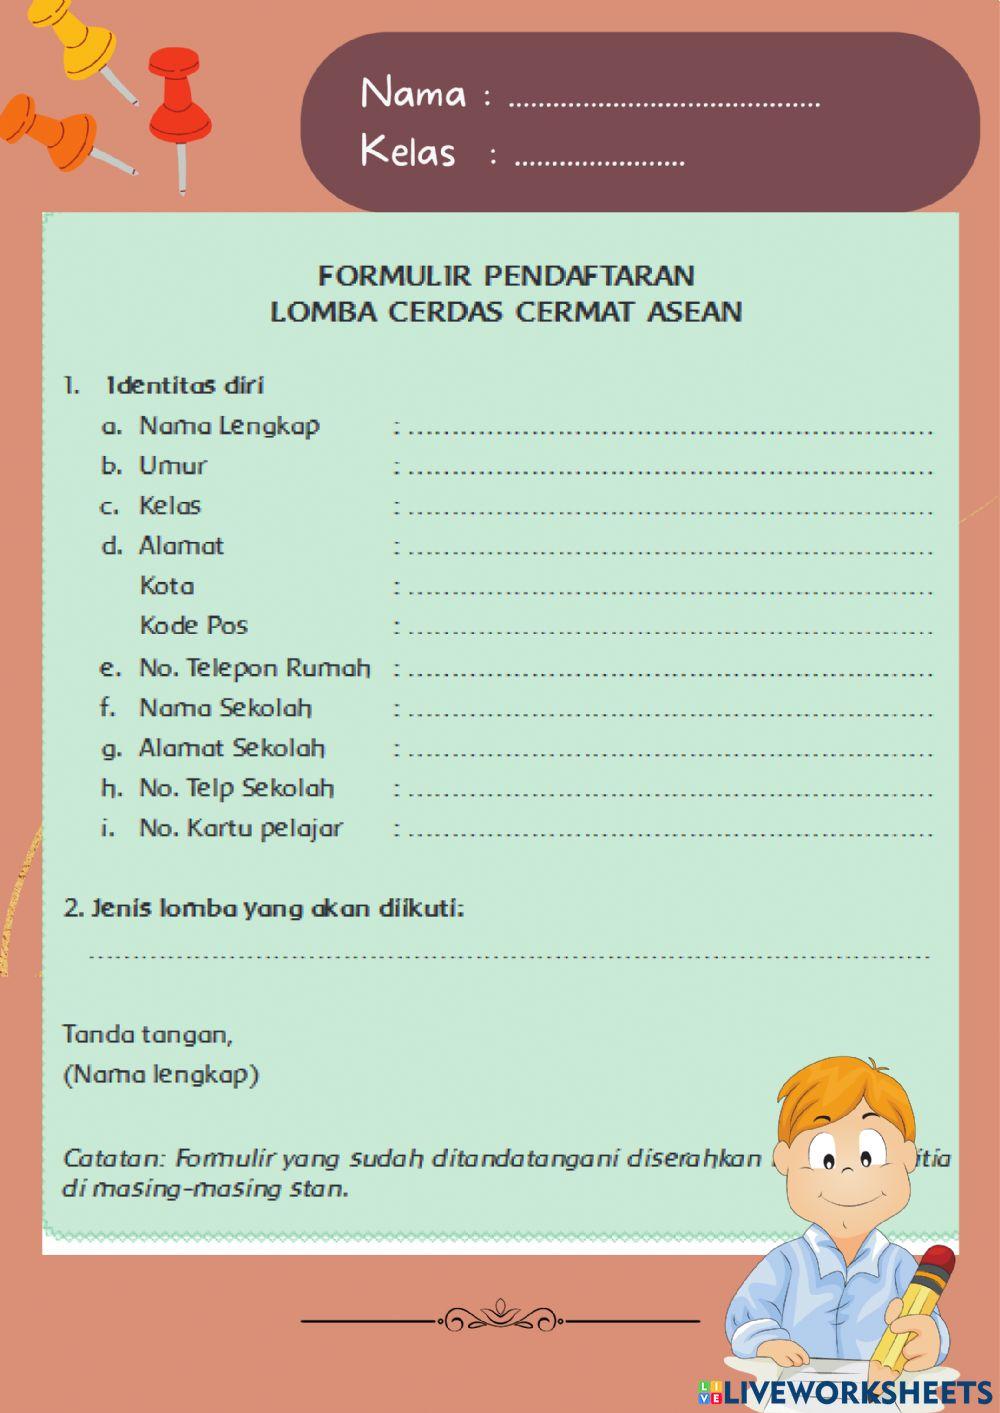 Tema 5 wirausaha muatan bahasa indonesia